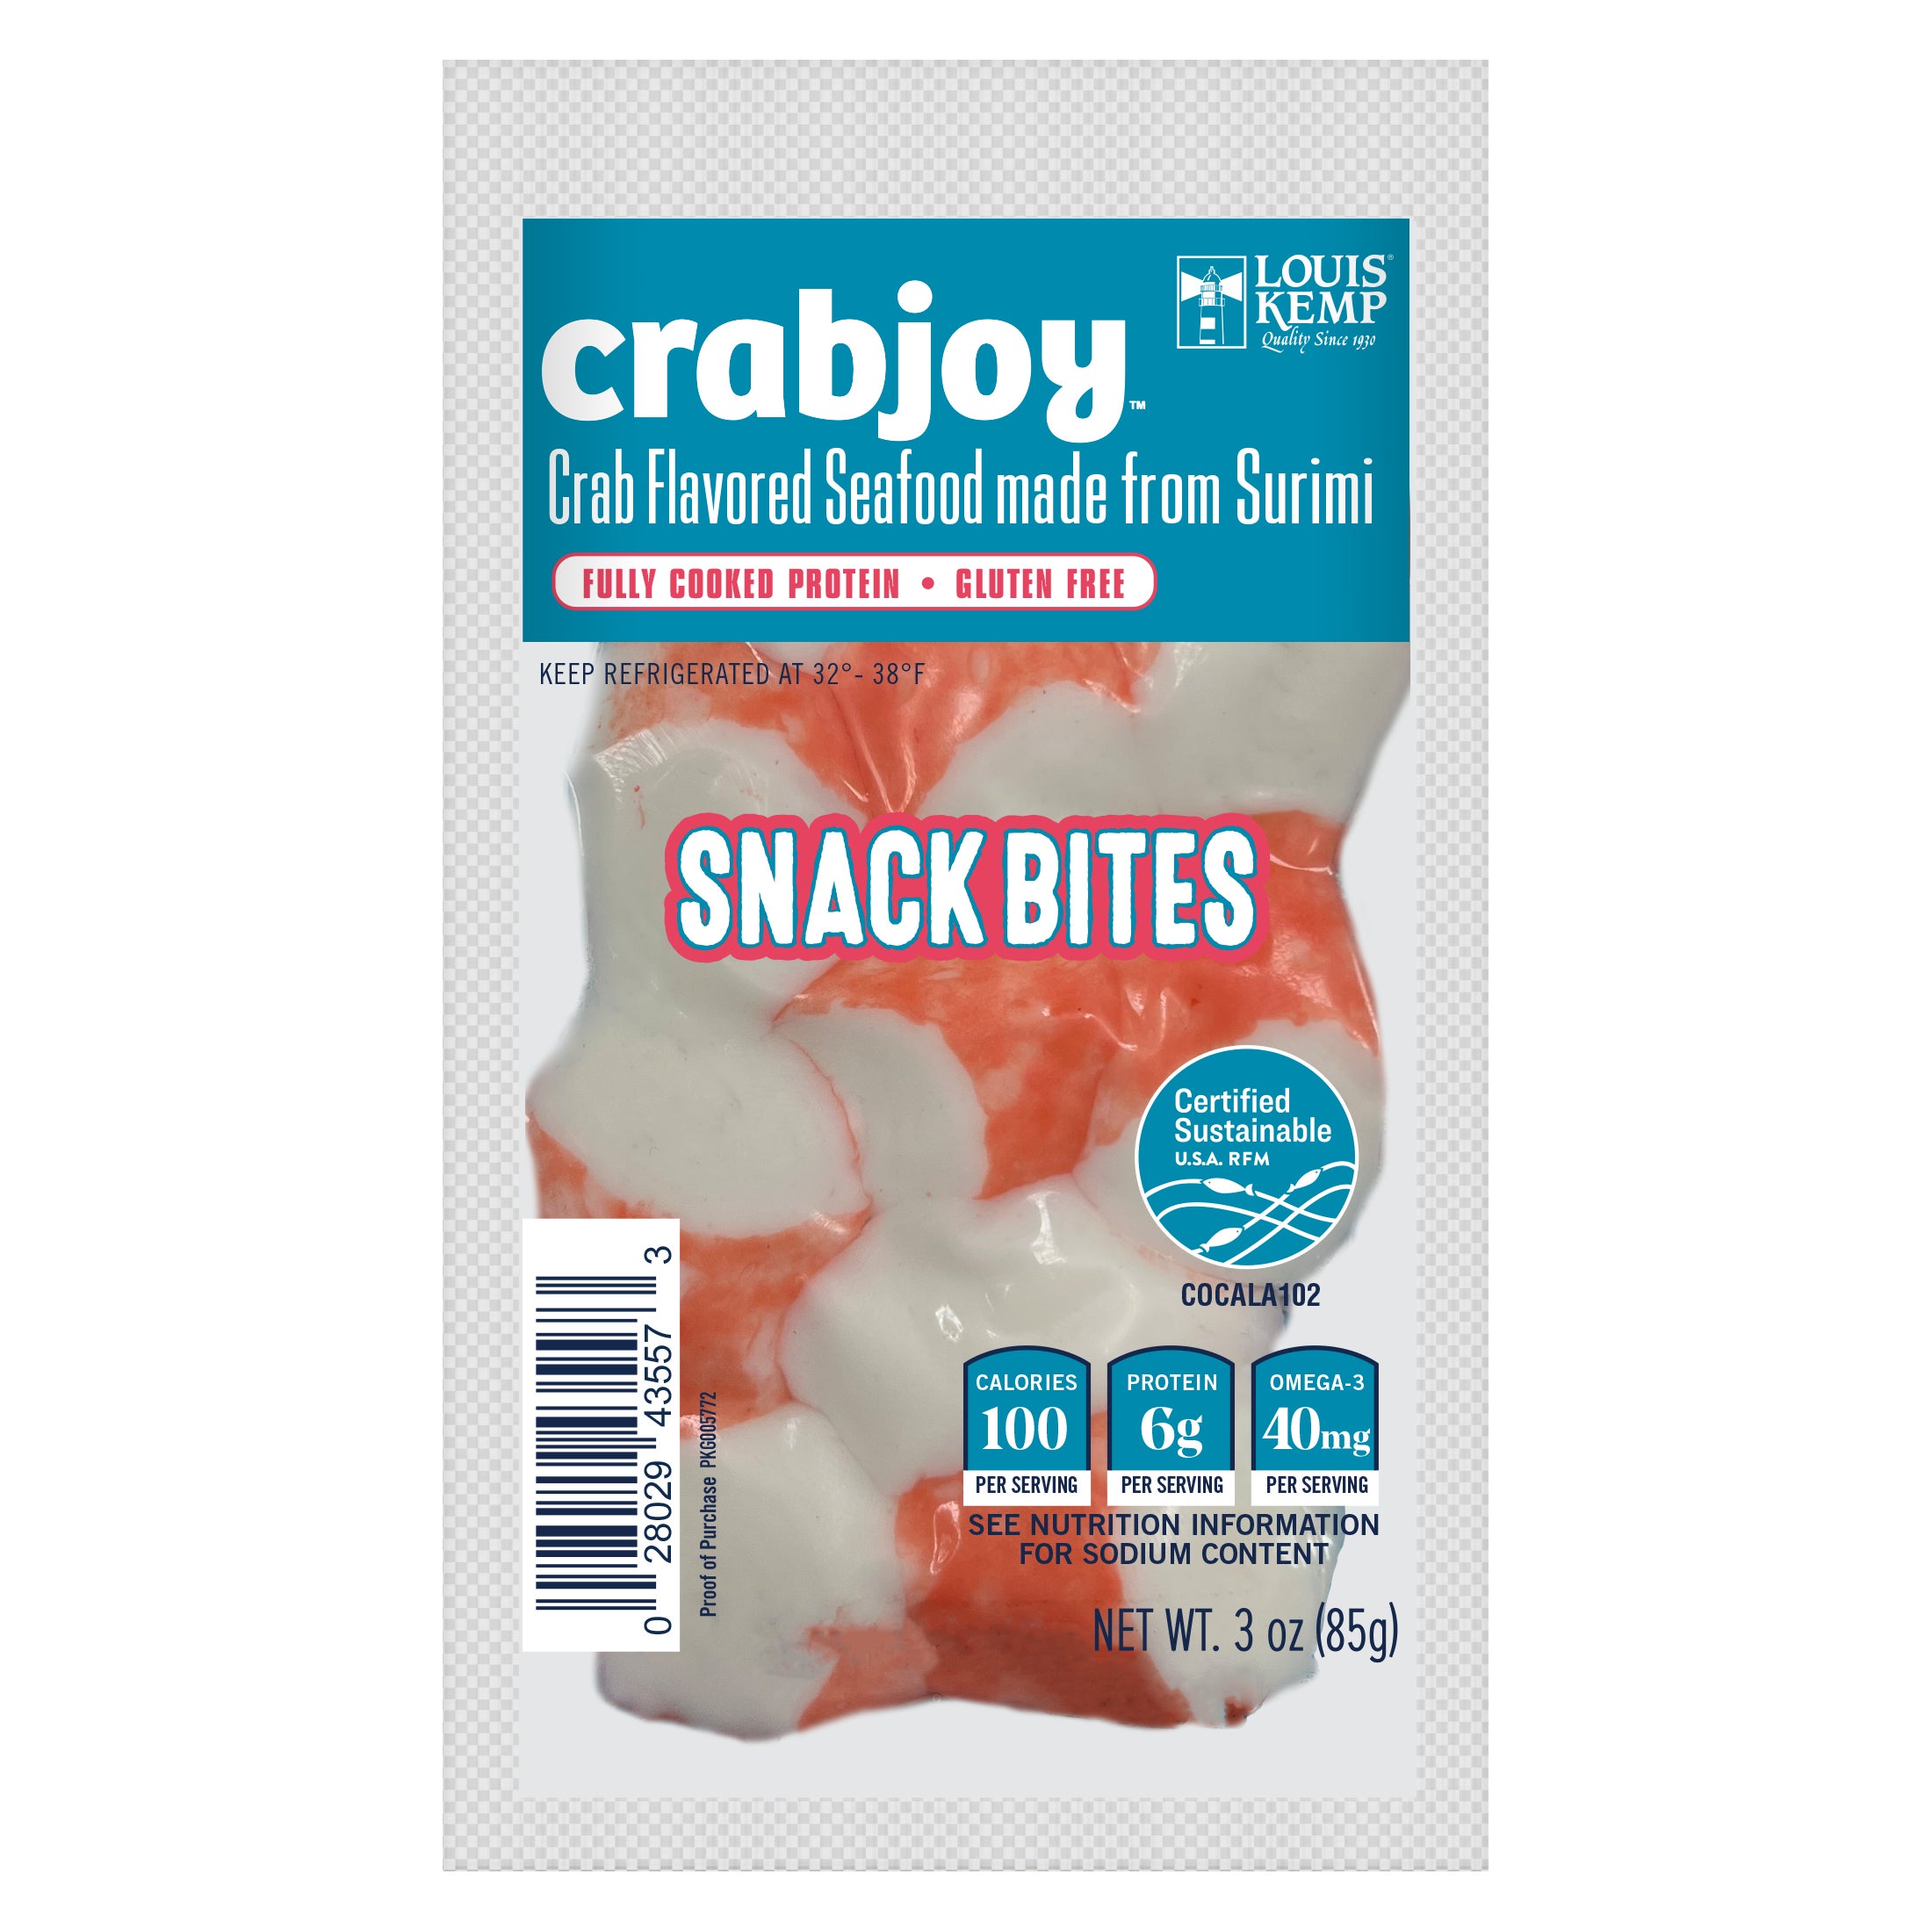 Crabjoy Snack Bites slide 0